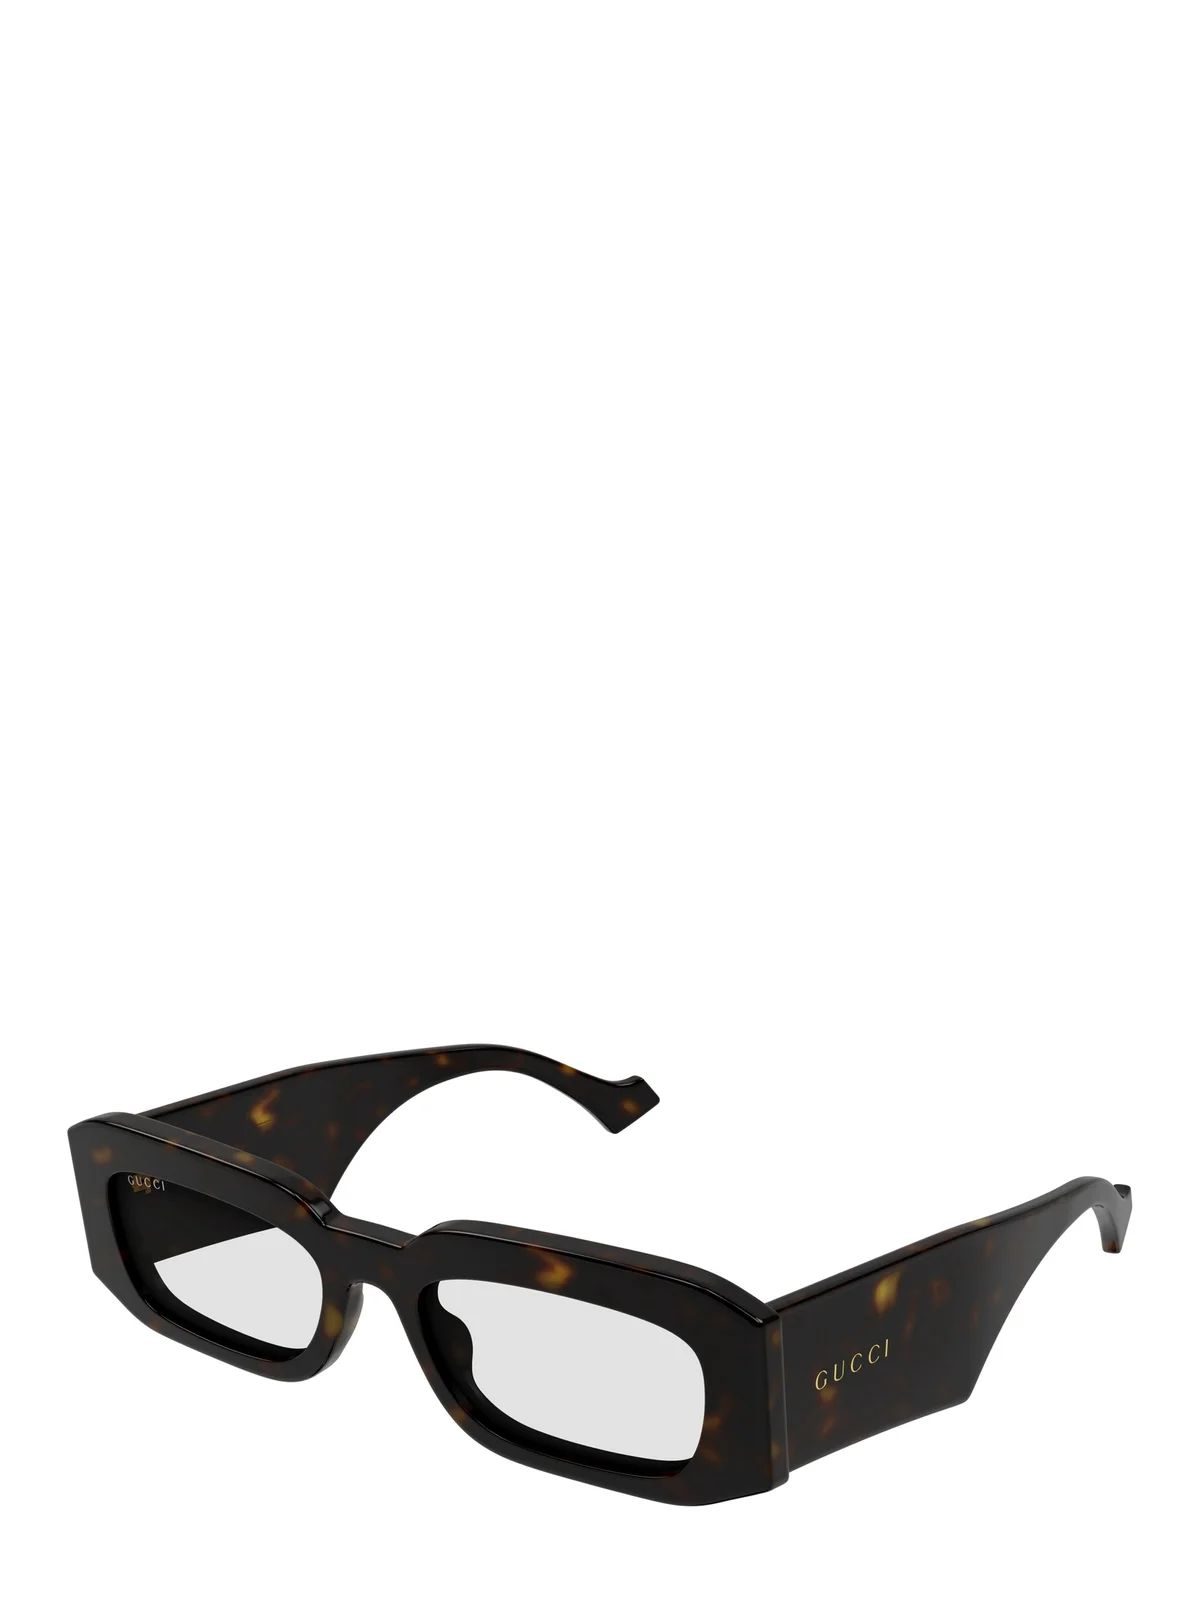 Gucci Eyewear Rectangular Frame Sunglasses | Cettire Global